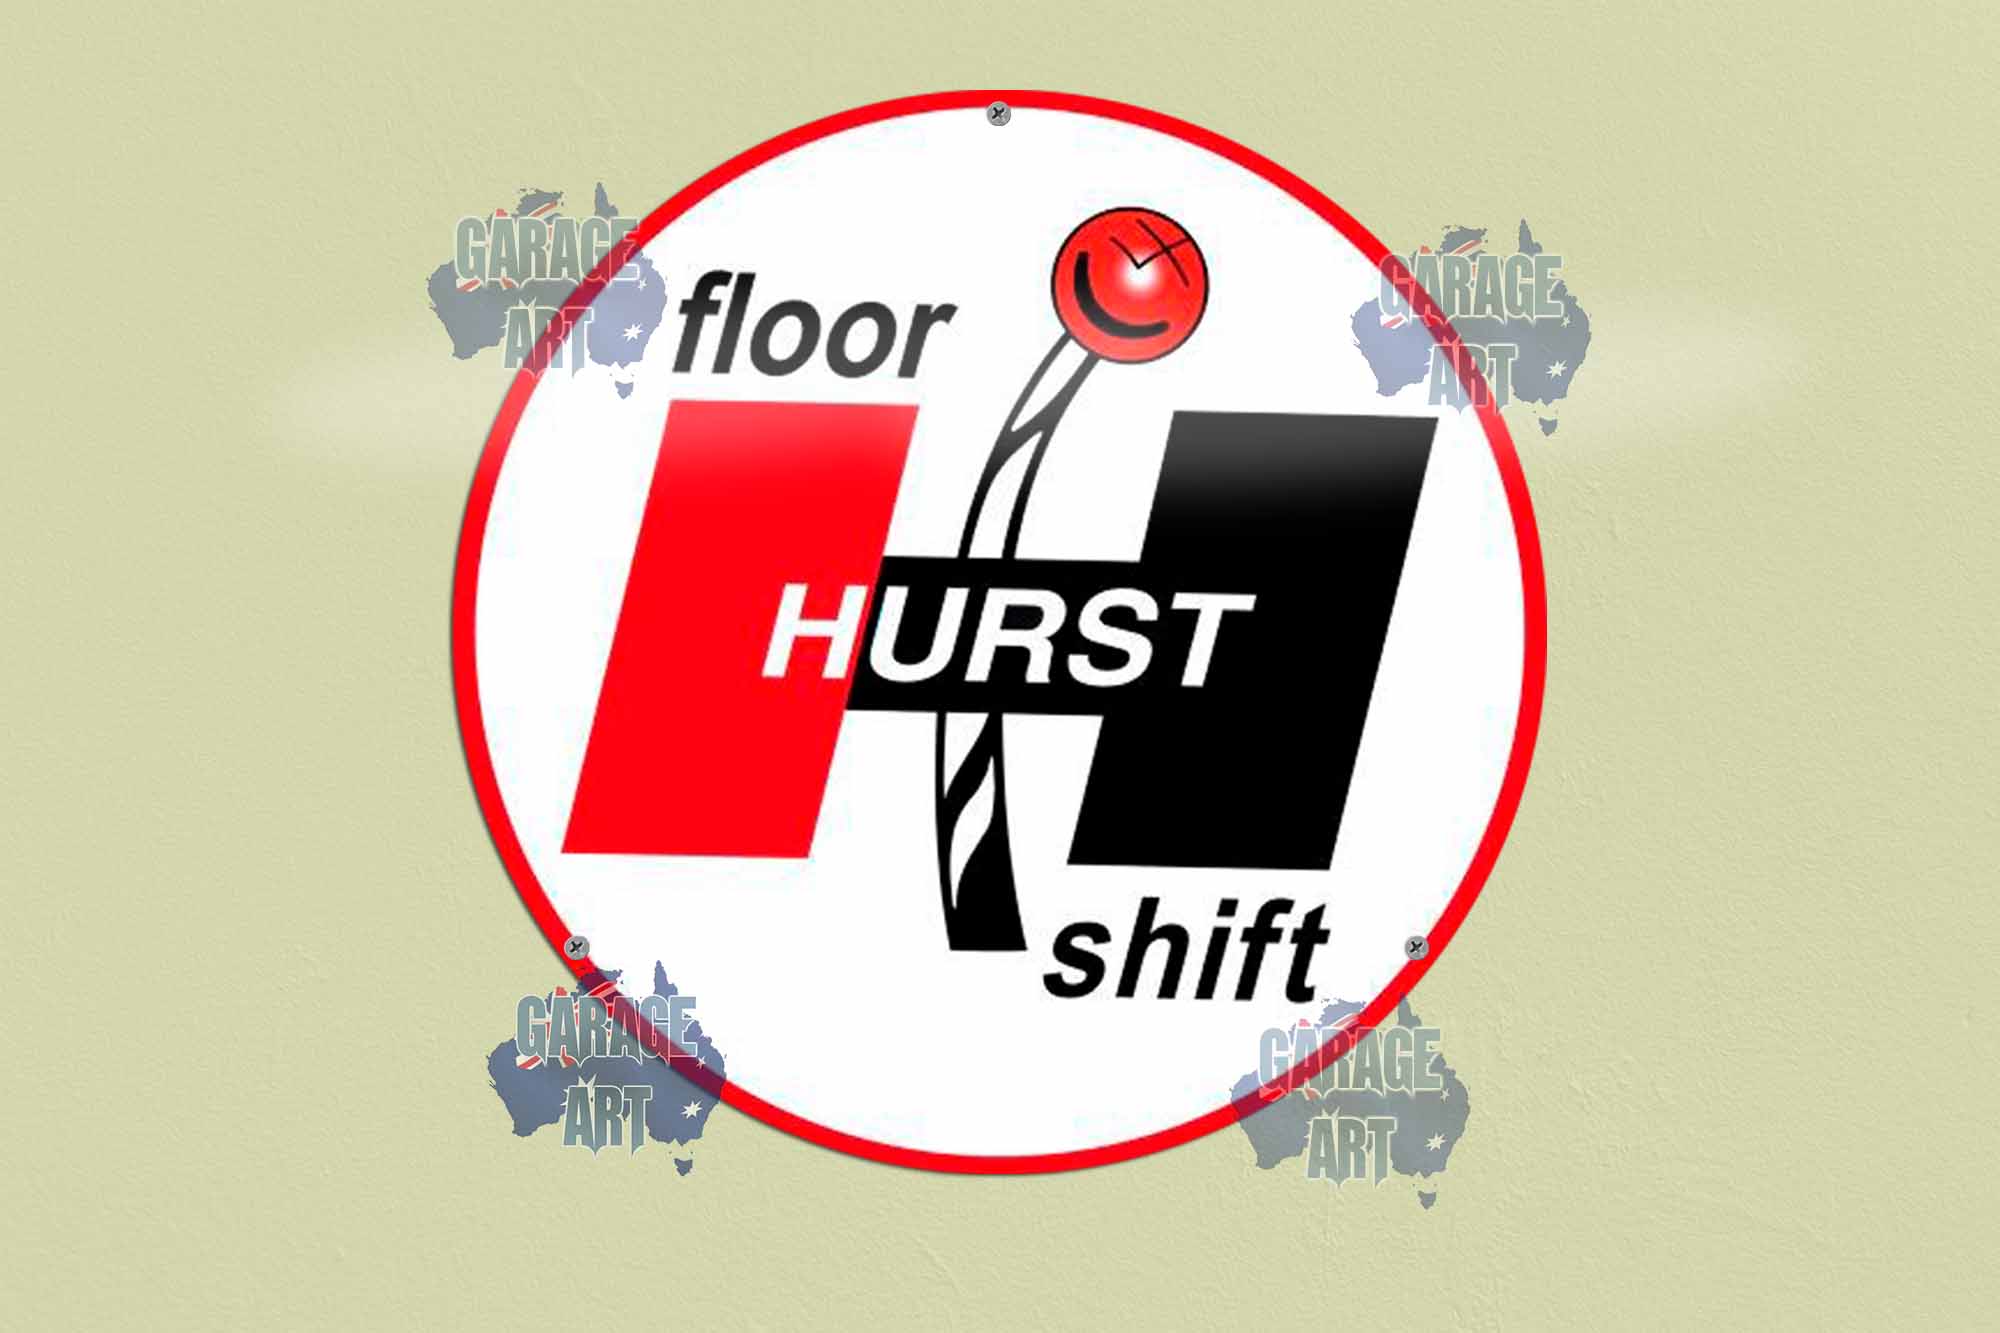 Hurst Shifter355mmDia  Tin Sign freeshipping - garageartaustralia